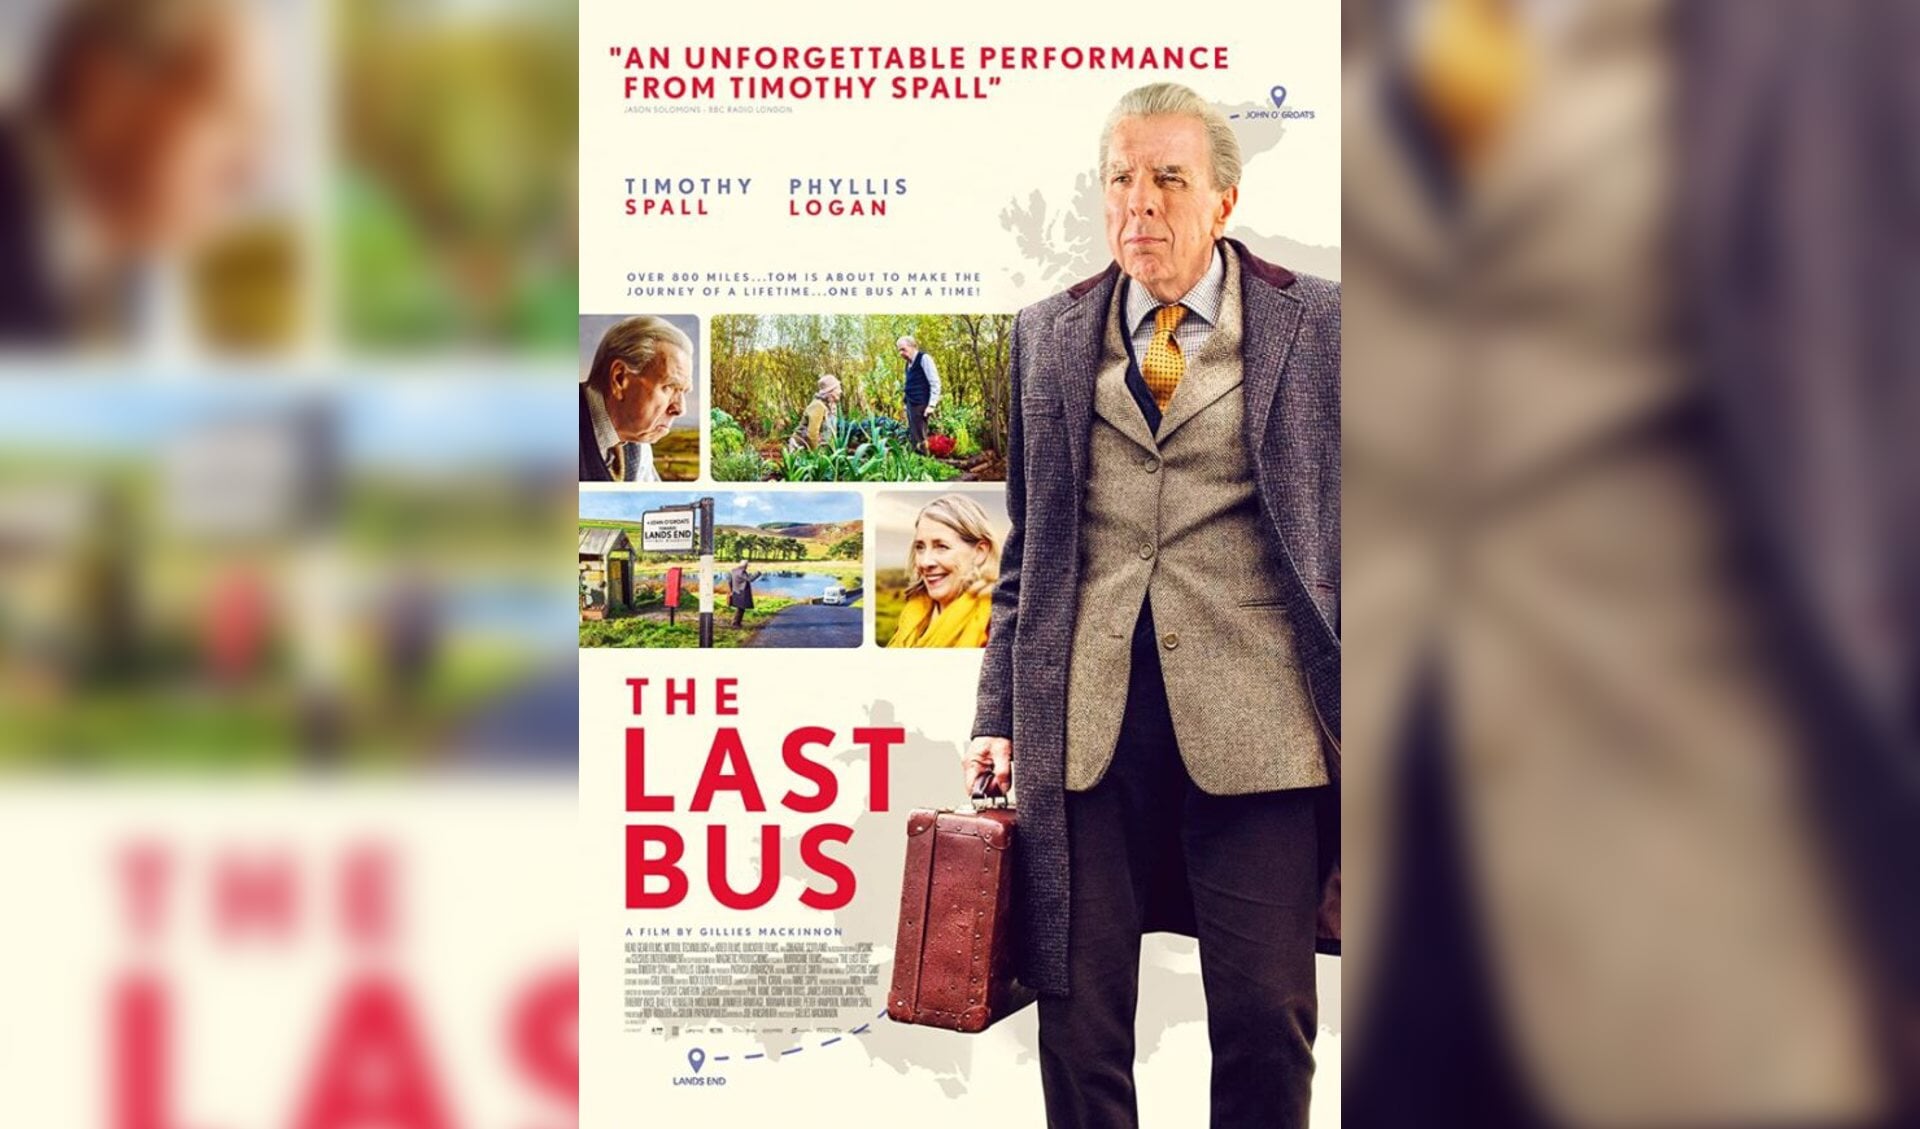 The last bus